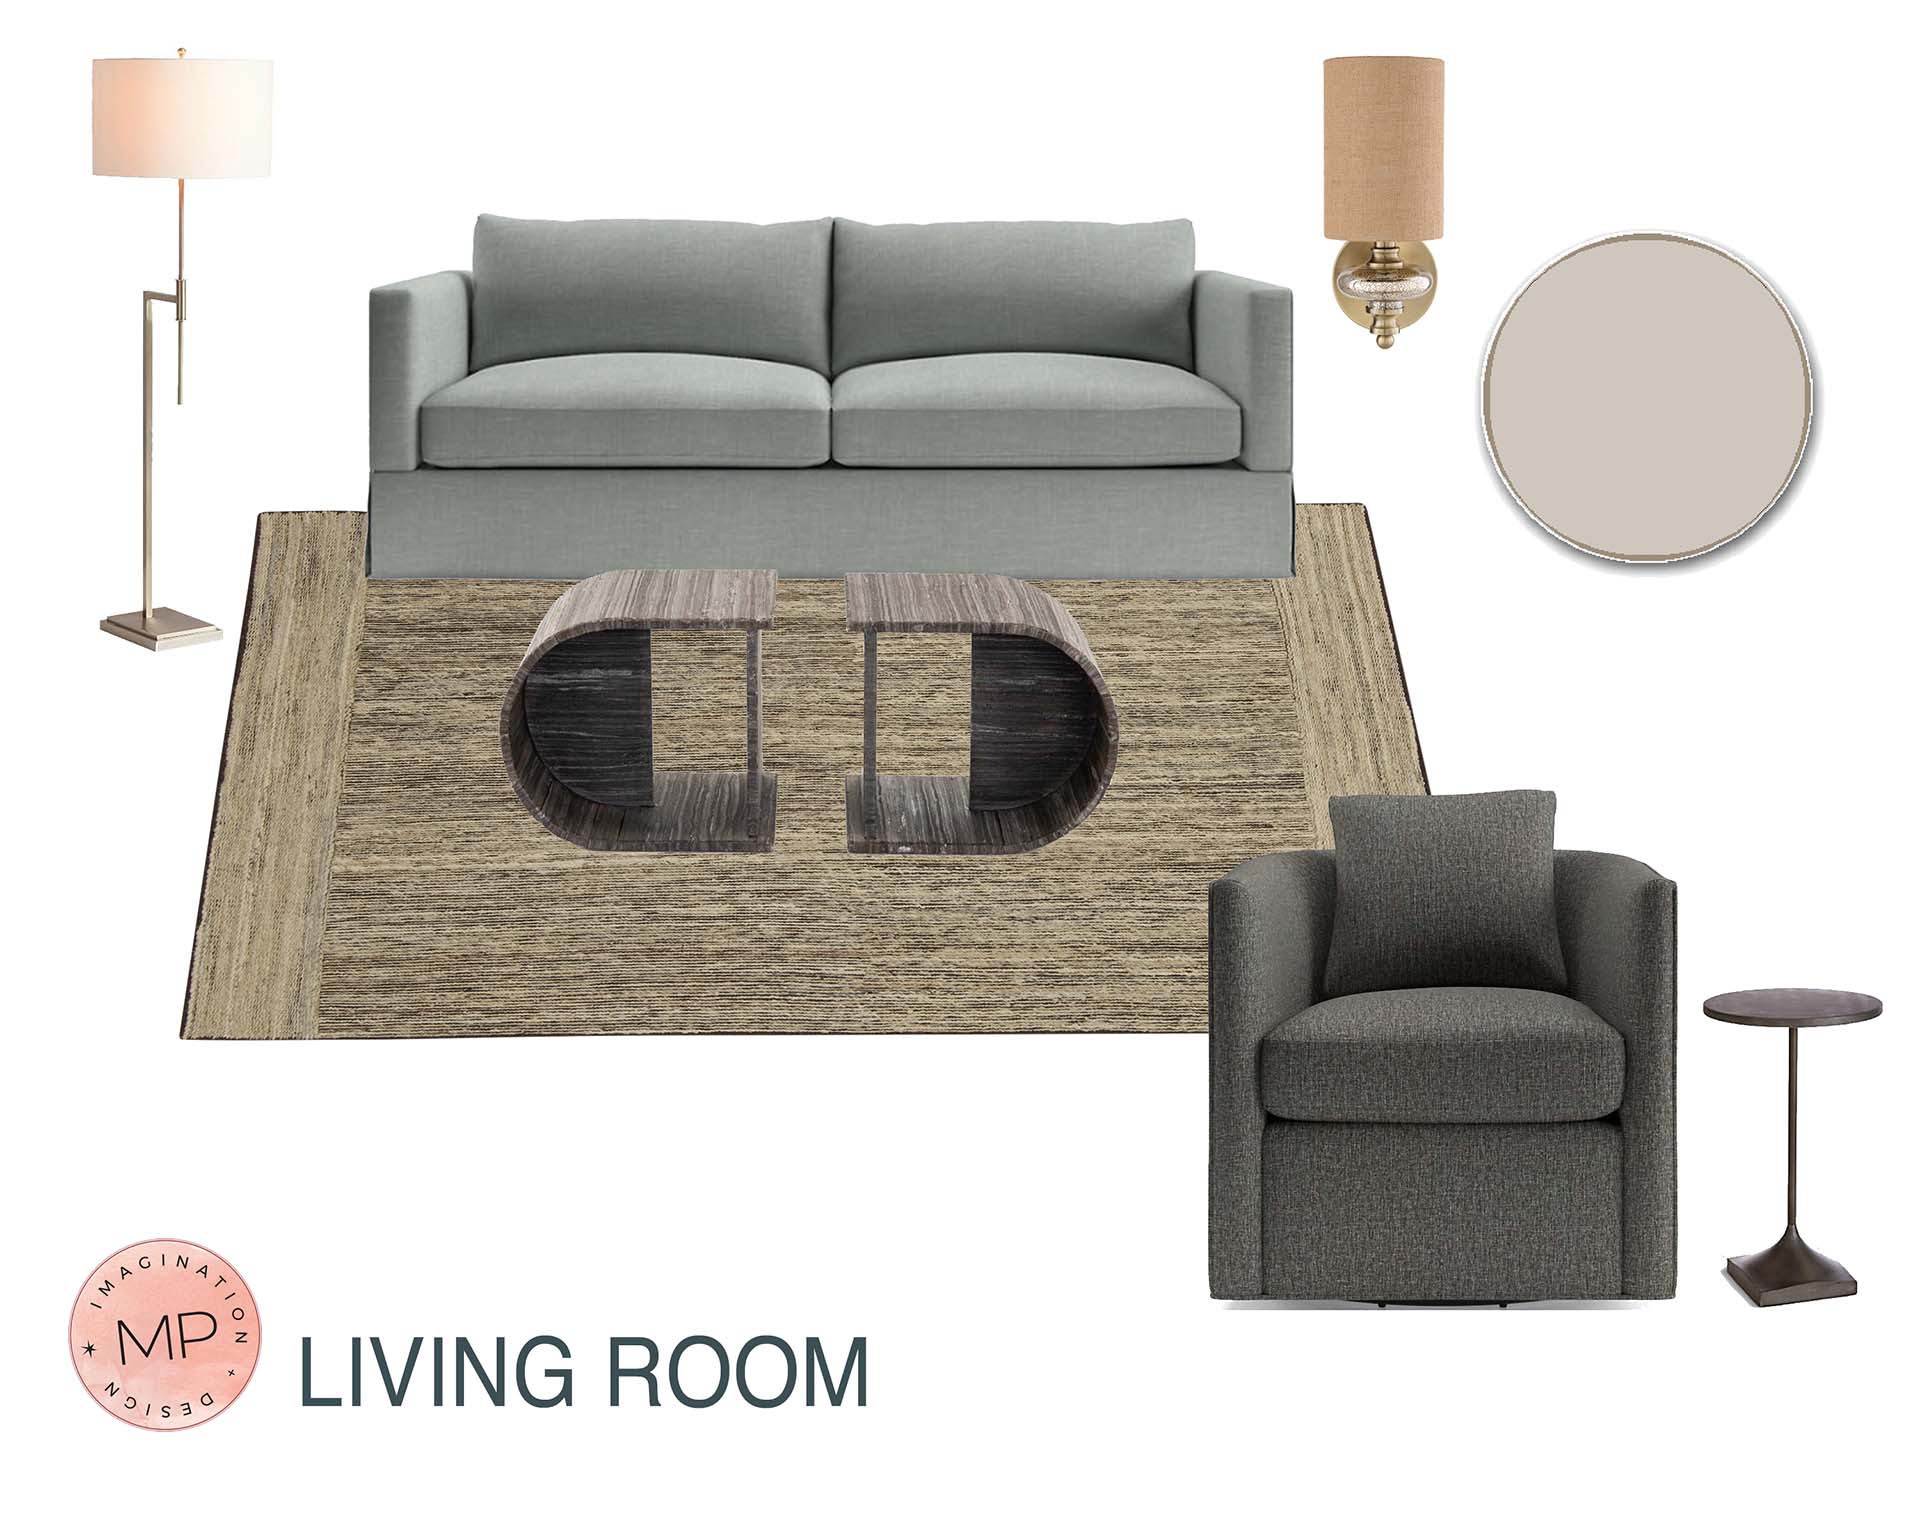 Laneway Living Room Concept